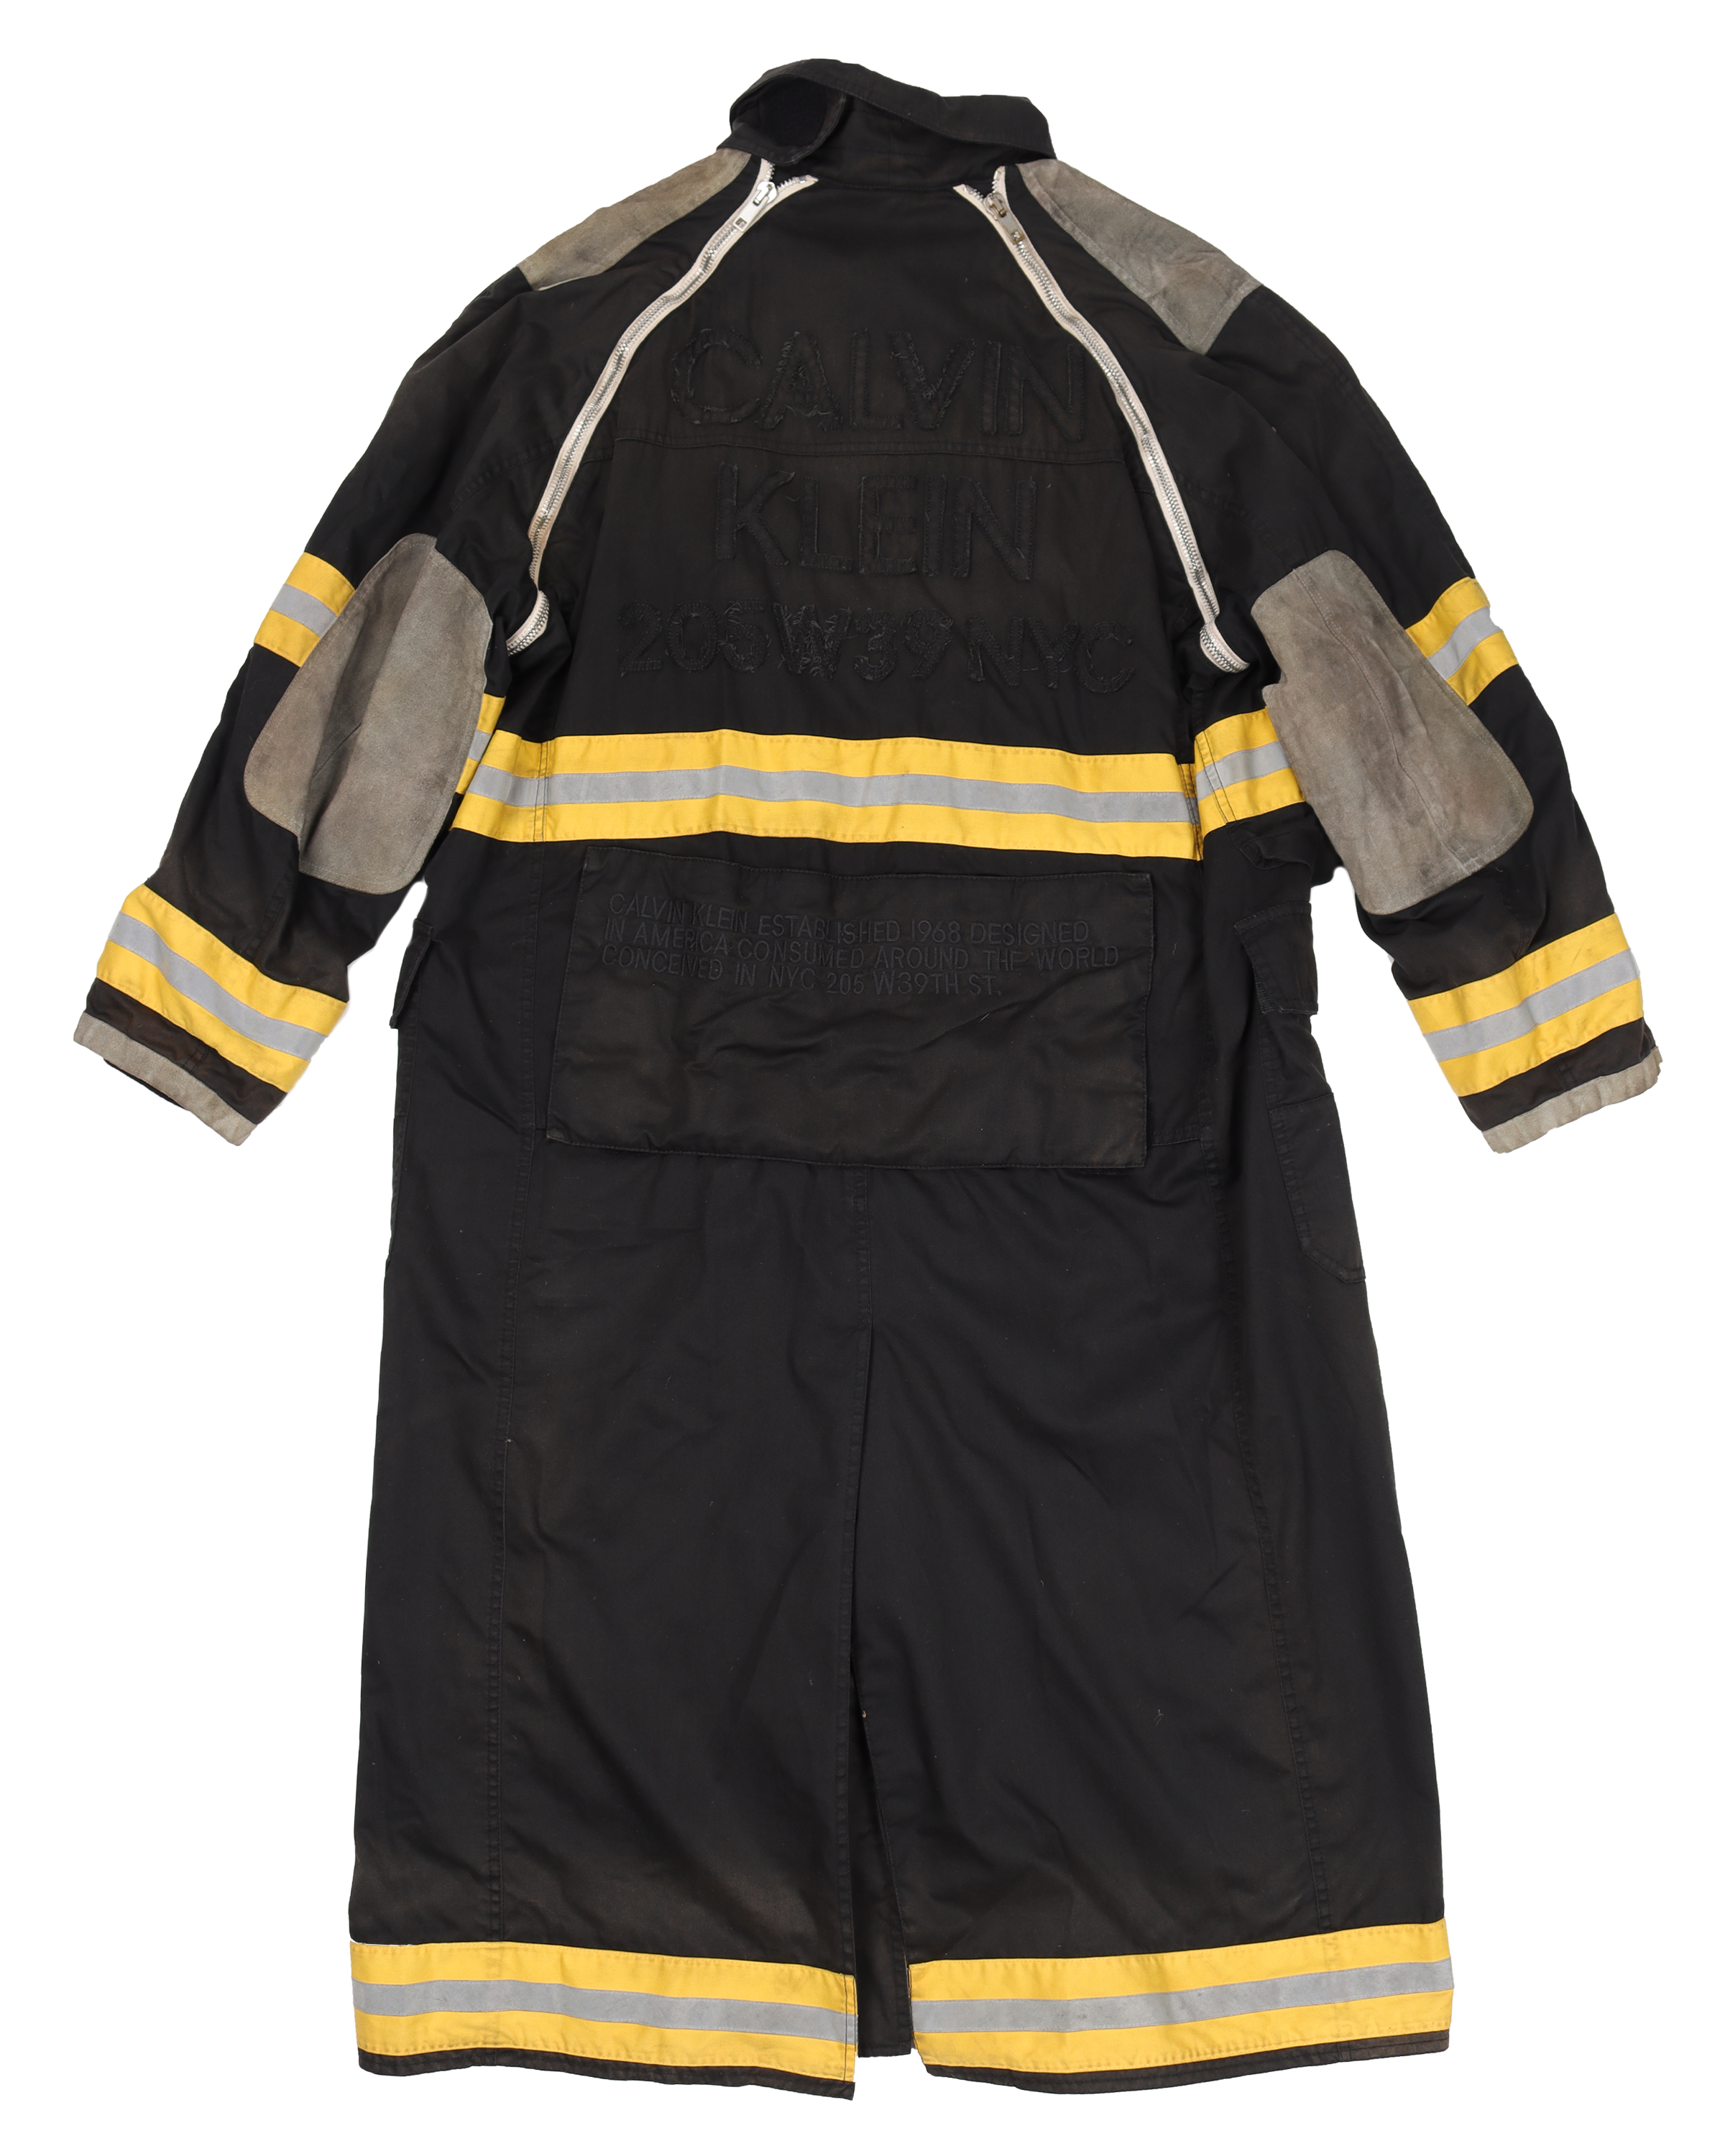 AW18 Fireman Coat Black